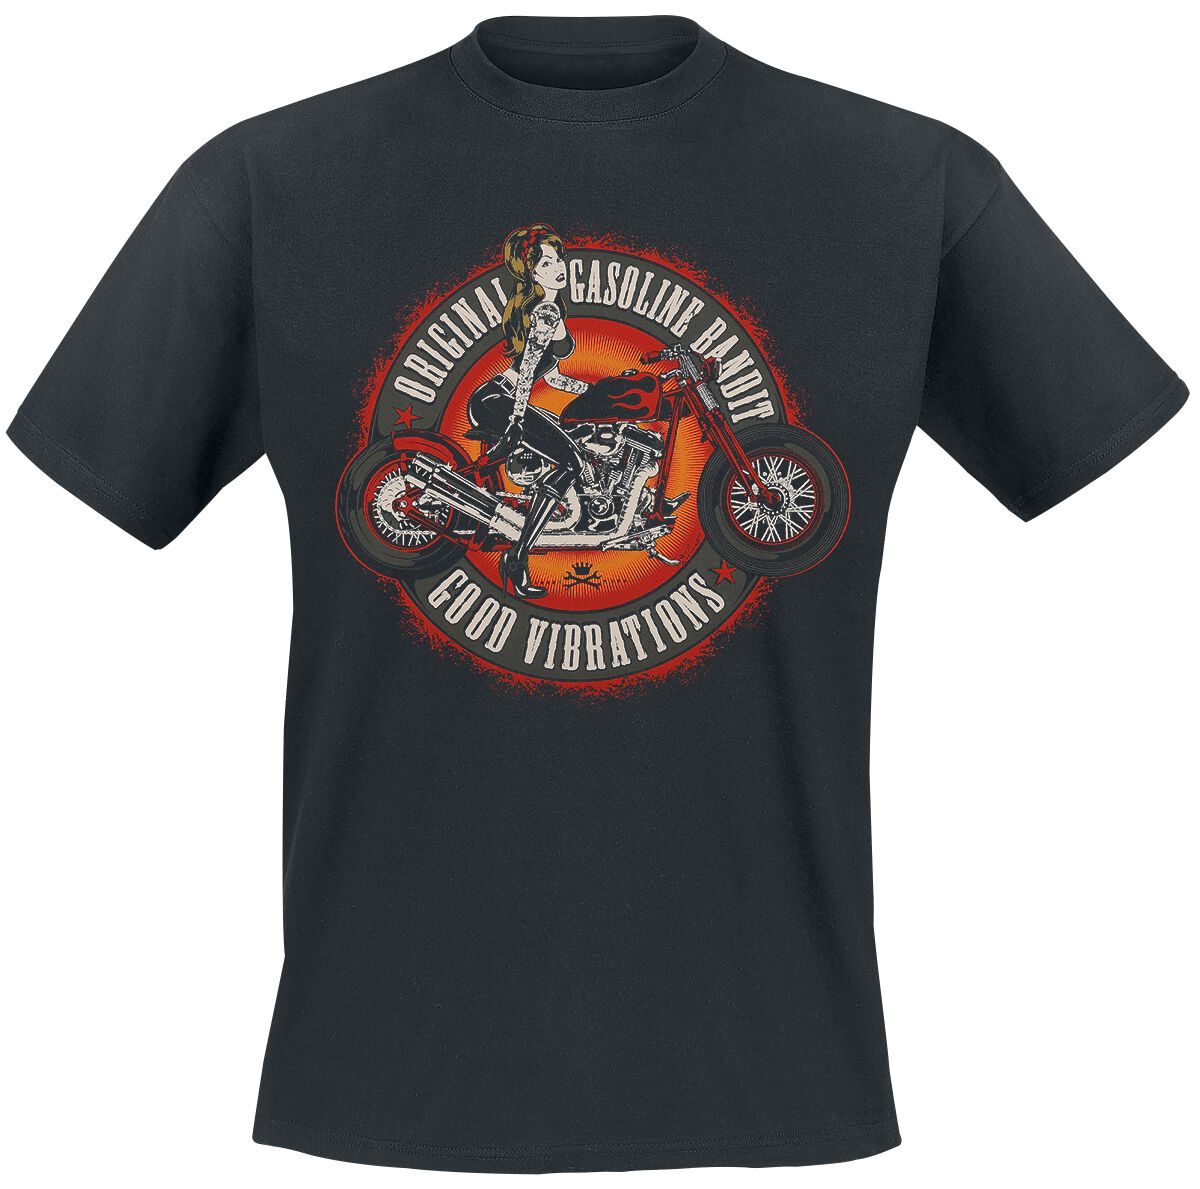 Gasoline Bandit Good Vibrations T-Shirt schwarz in XXL